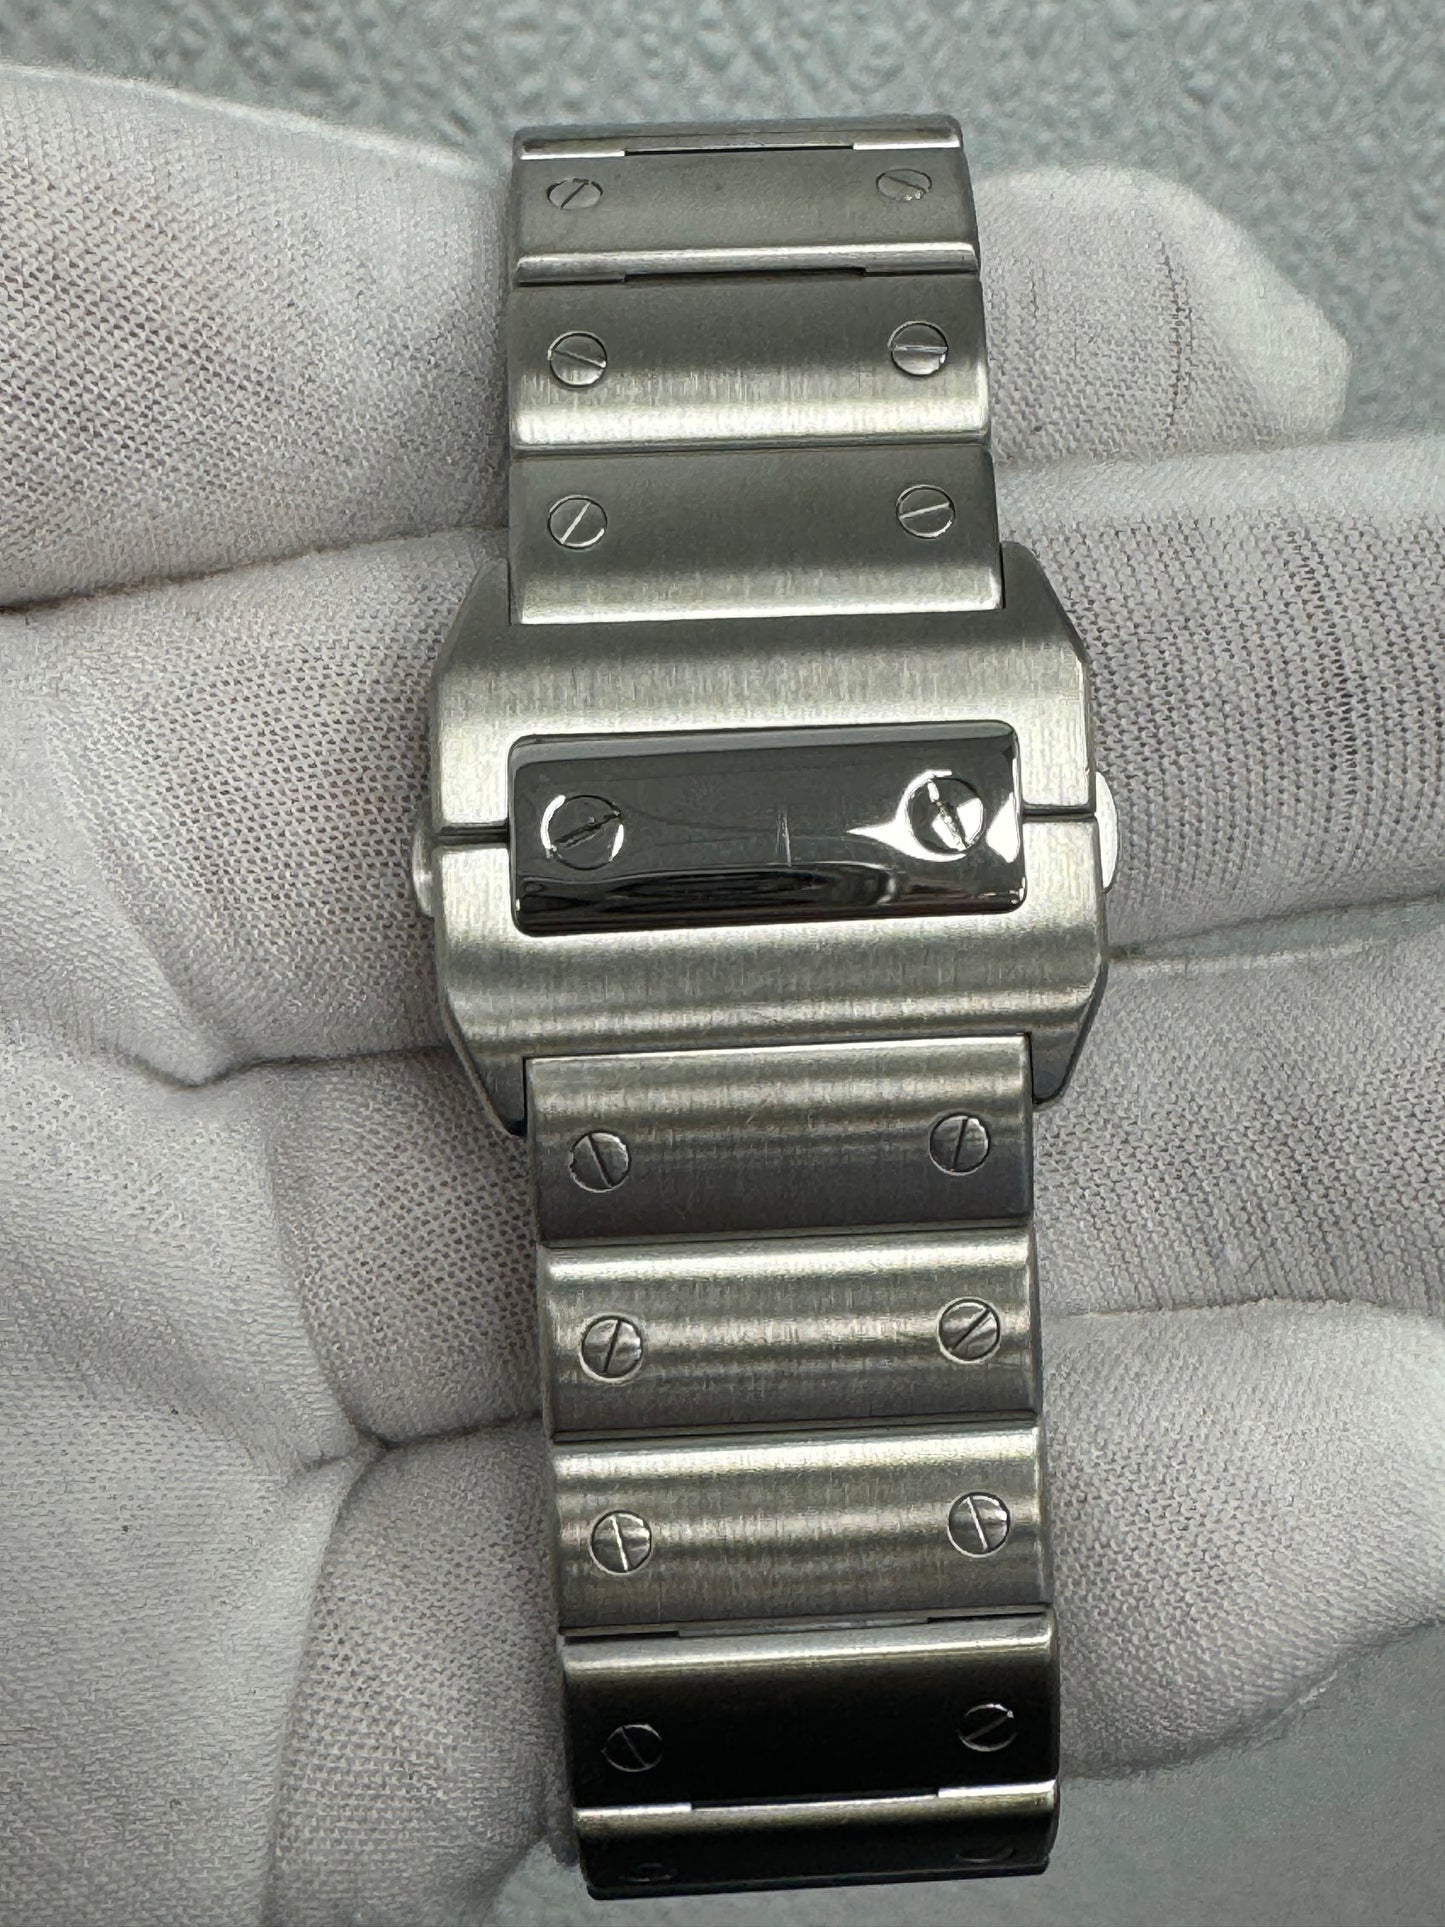 Cartier Santos 100 Stainless Steel 38mm White Roman Dial Watch  Reference #: W200737G - Happy Jewelers Fine Jewelry Lifetime Warranty